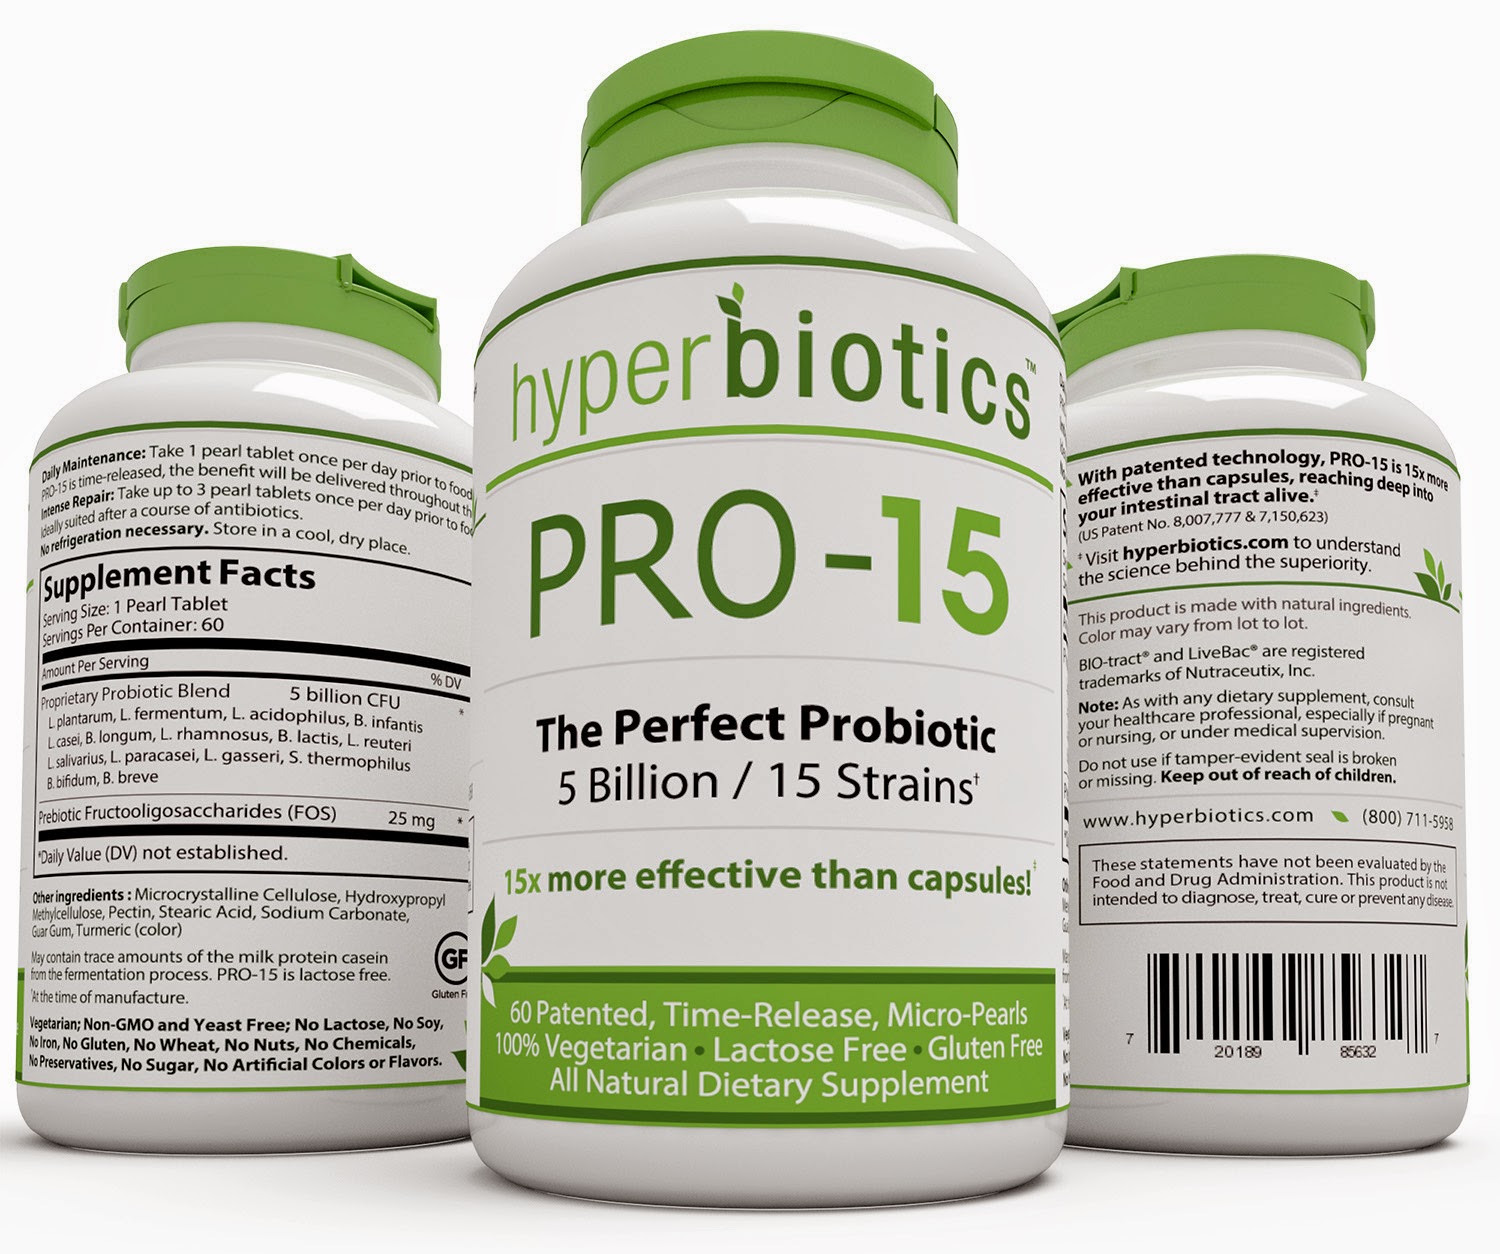 Hyperbiotics Probiotics help create a